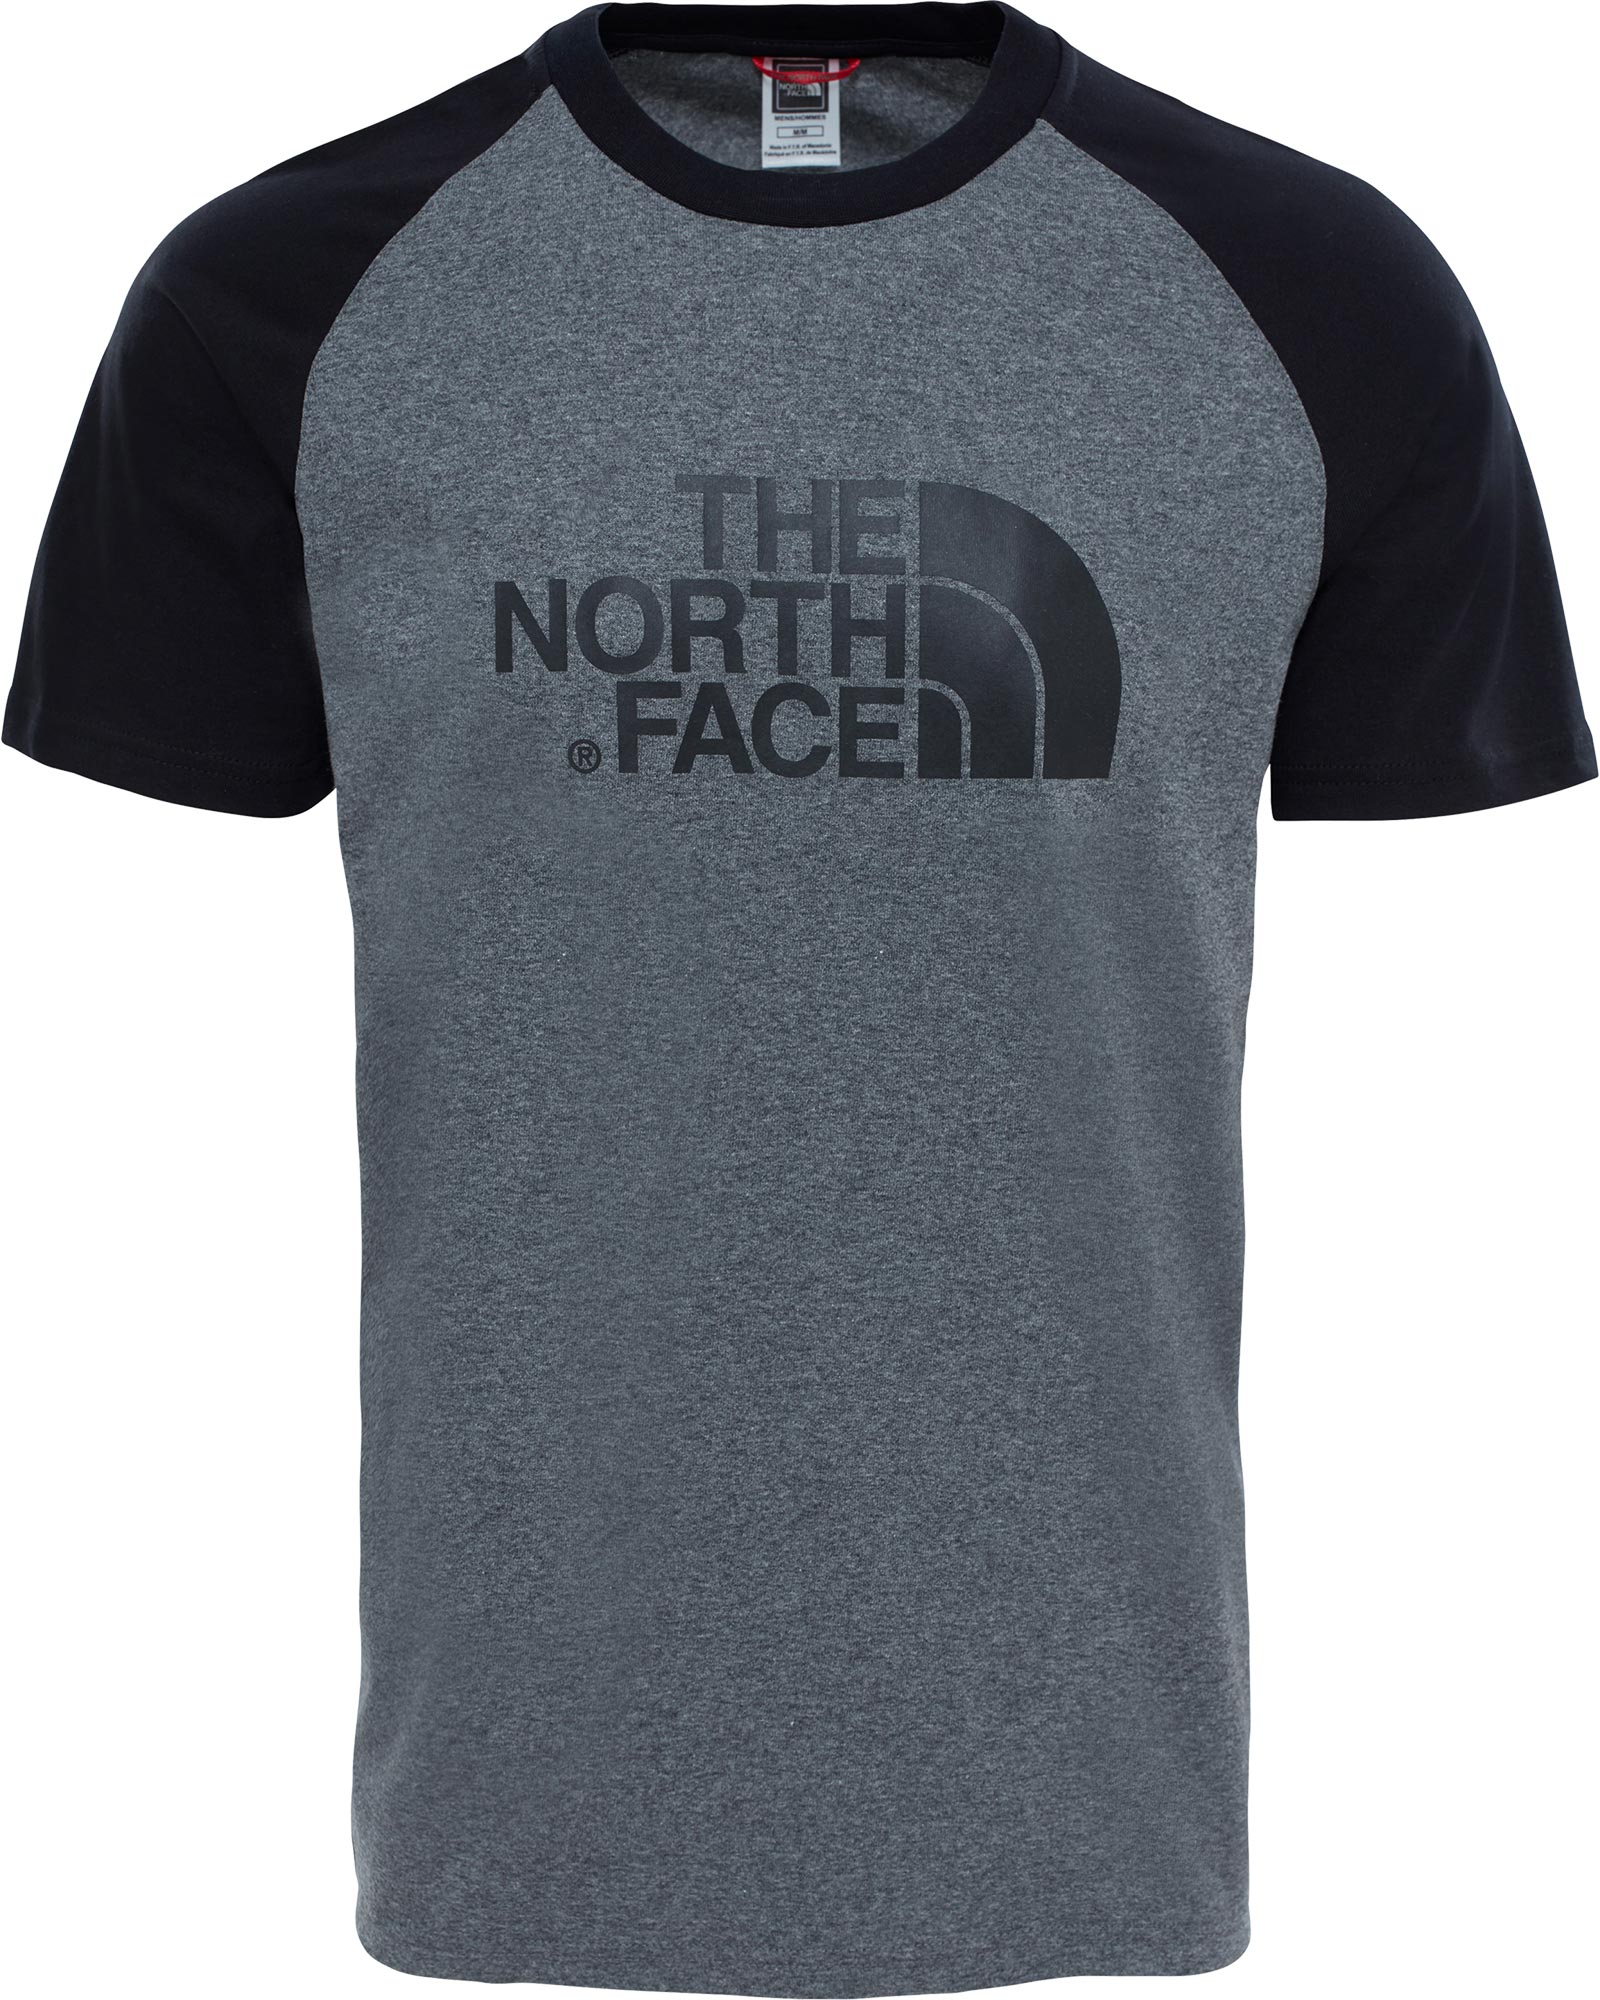 The North Face Raglan Easy Men’s T Shirt - TNF Medium Grey Heather S